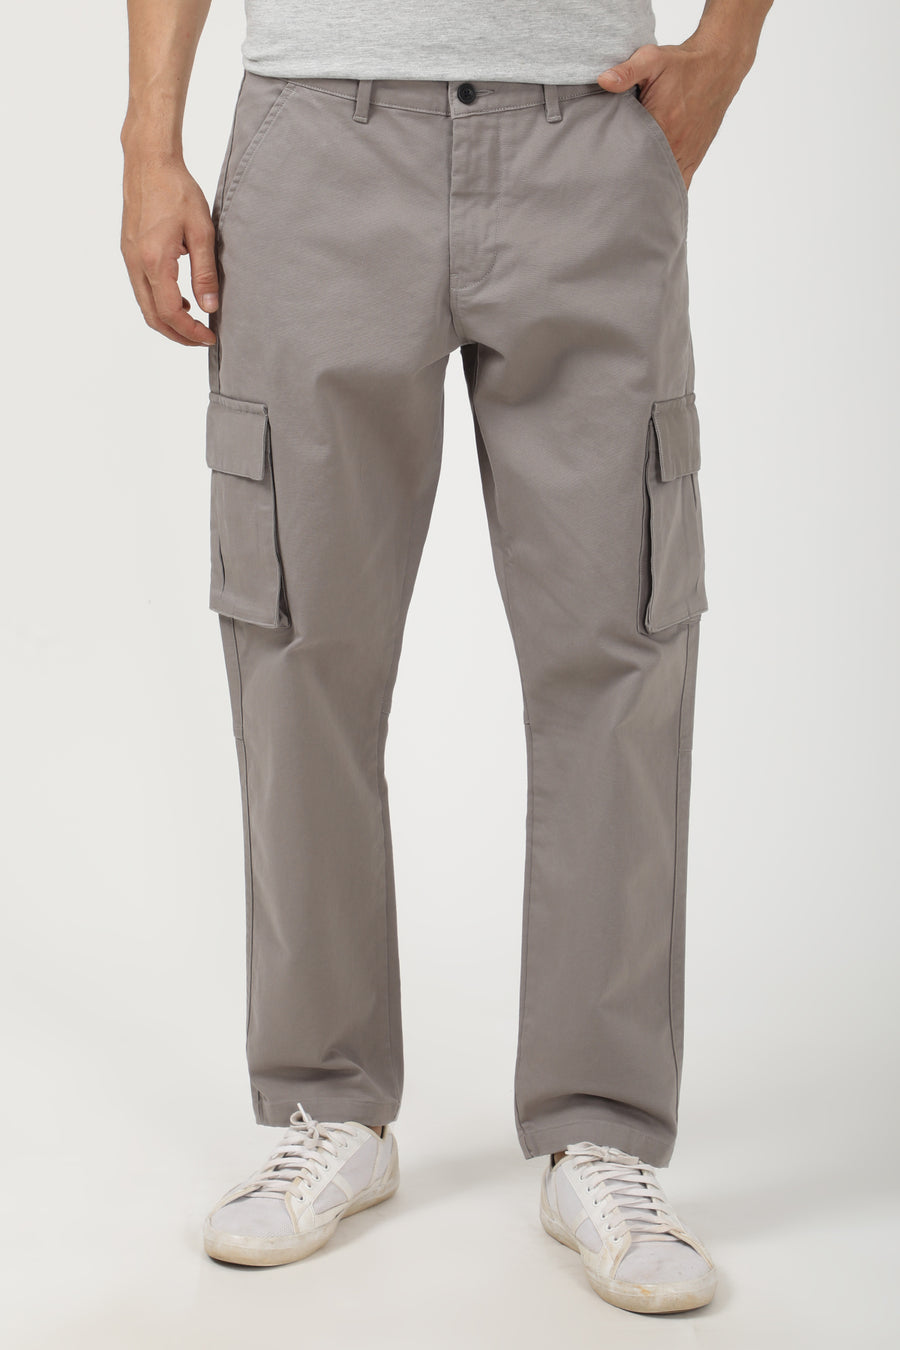 Creed - Comfort Cargo Trouser - Grey